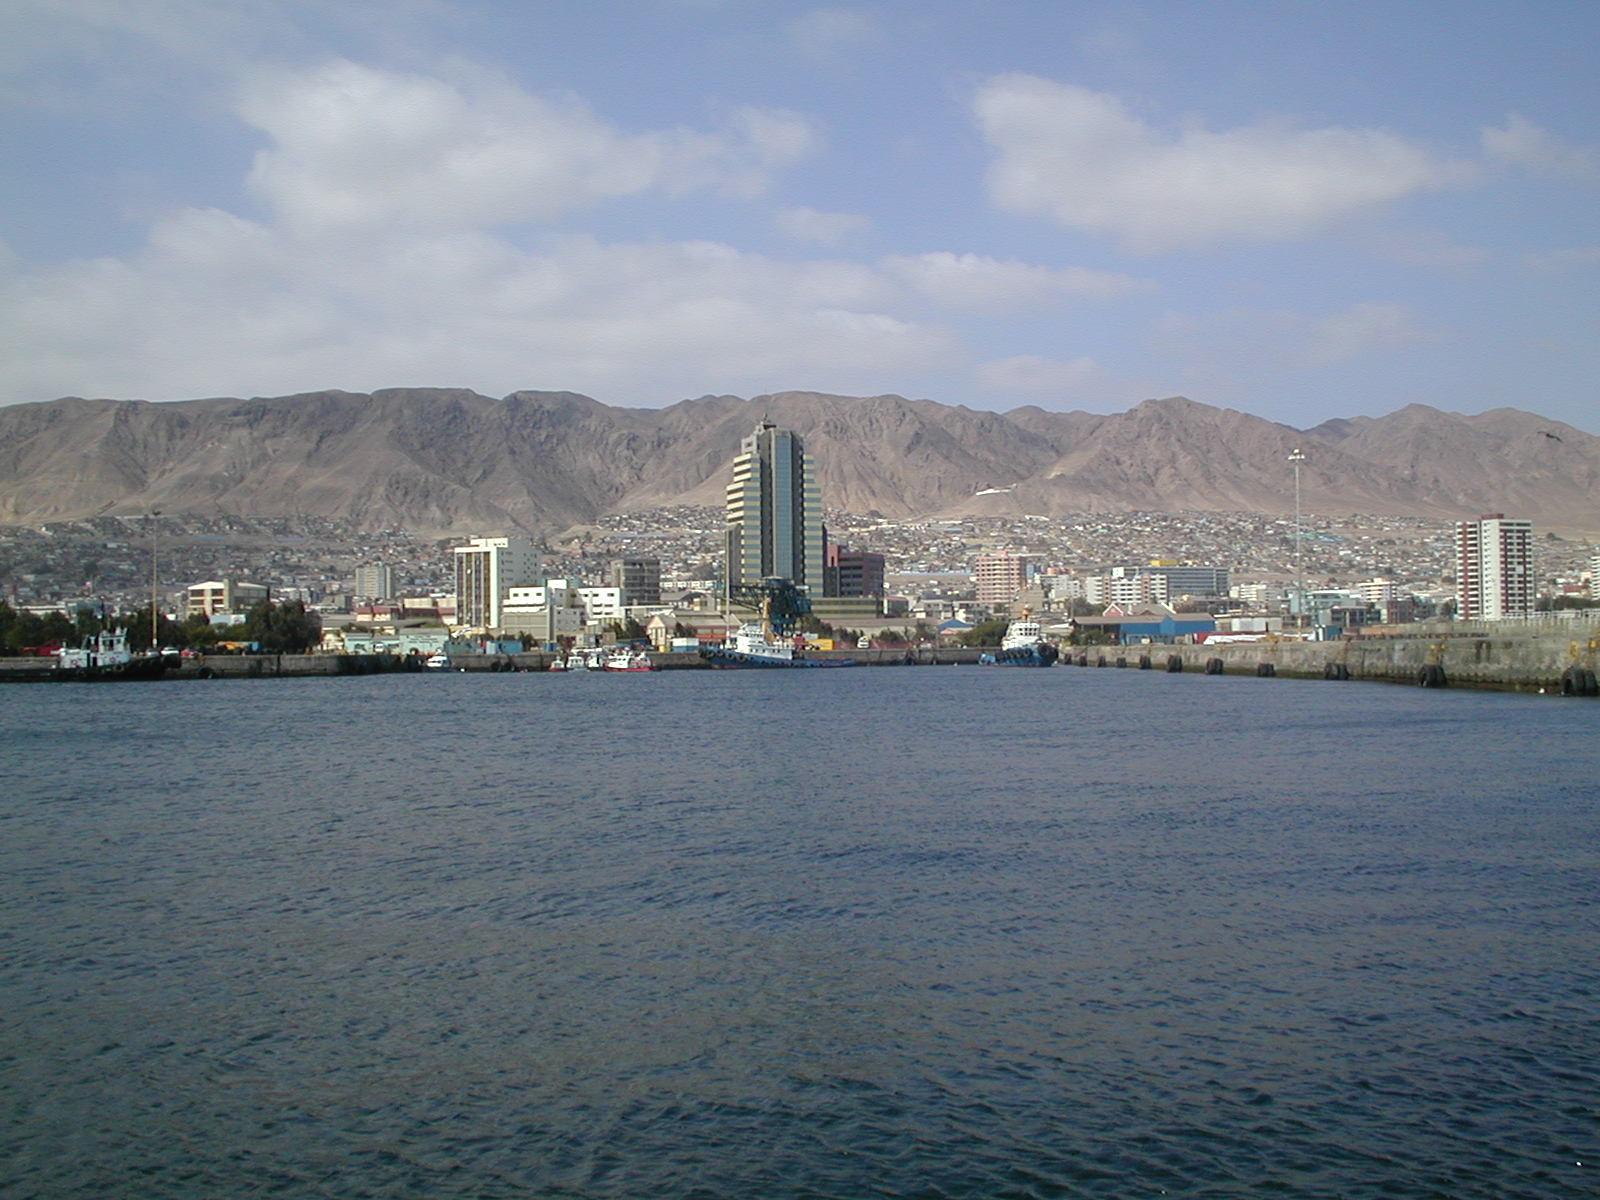 Chile Antofagasta